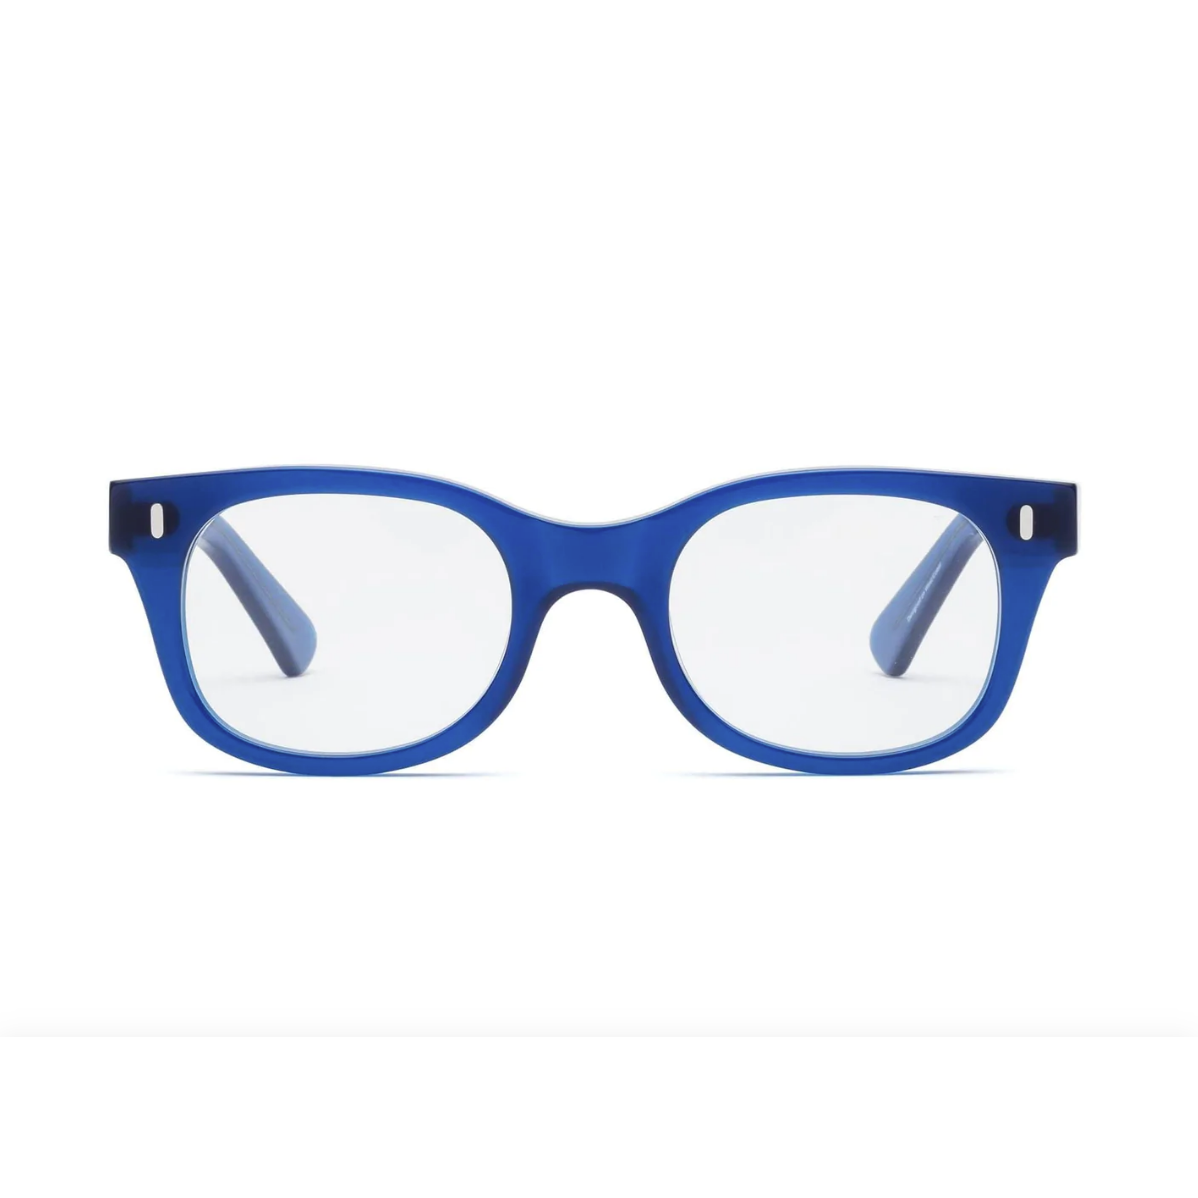 Gotstyle Fashion - Caddis Eyewear Bixby Thick Frame Reading Glasses - Gloss Minor Blues